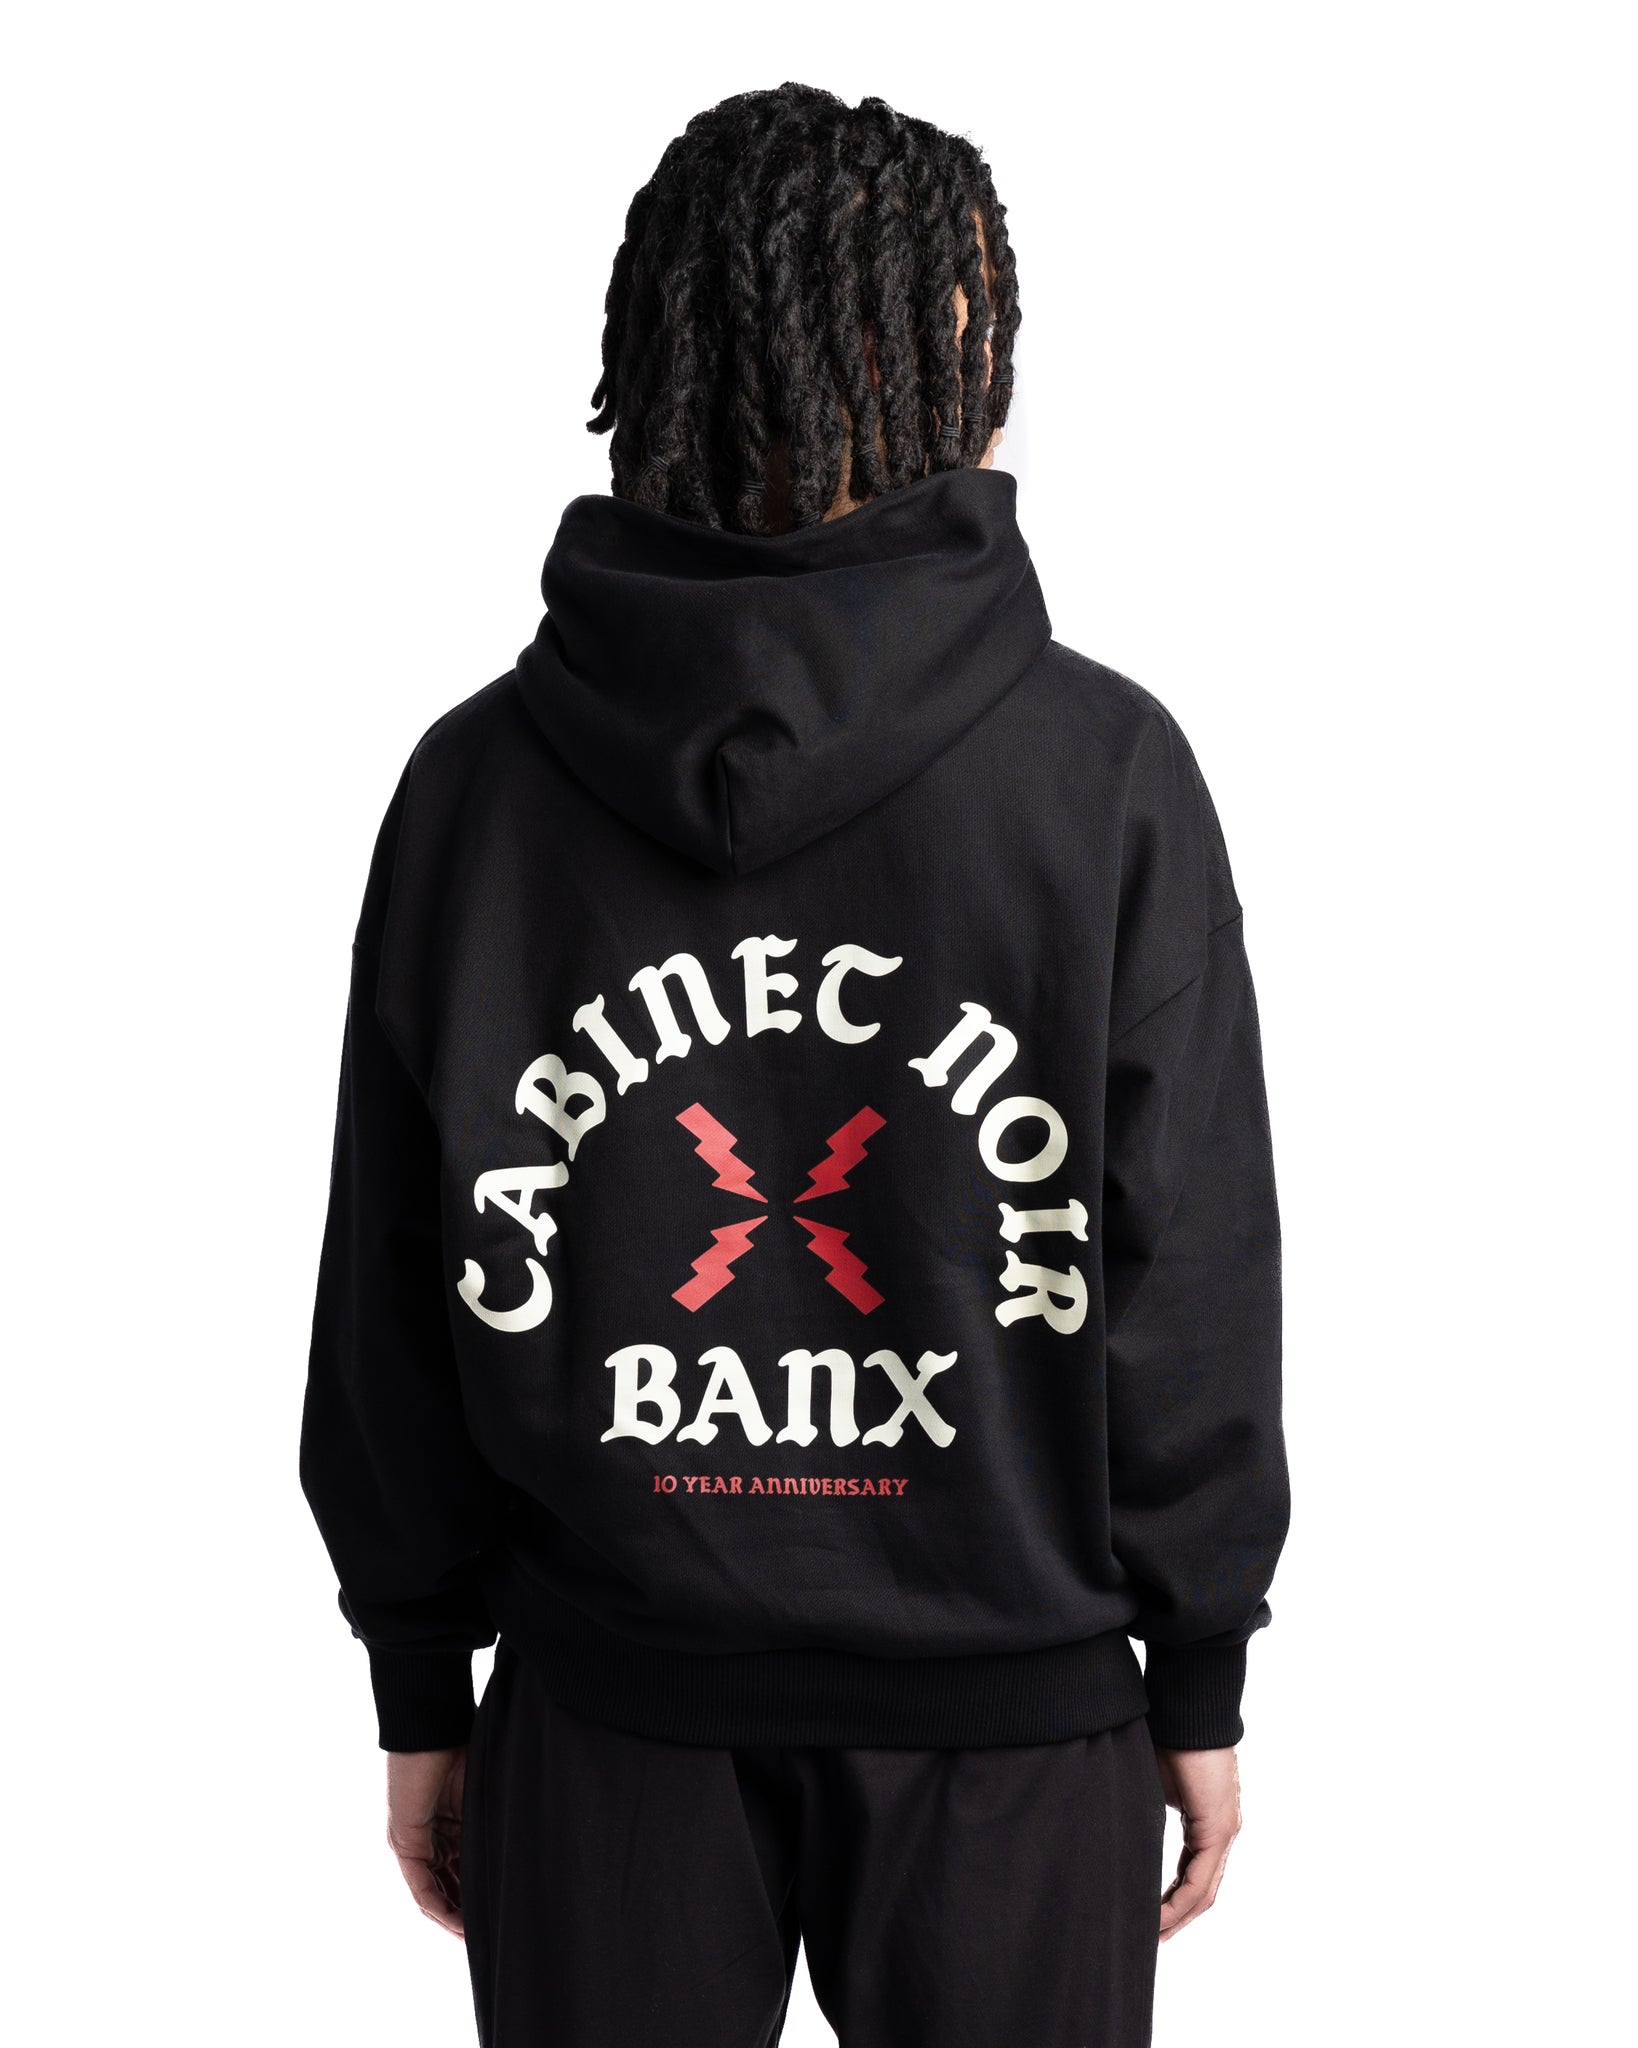 Cabinet Noir x BANX 10 Year Anniversary Hoodie Black/White/Red